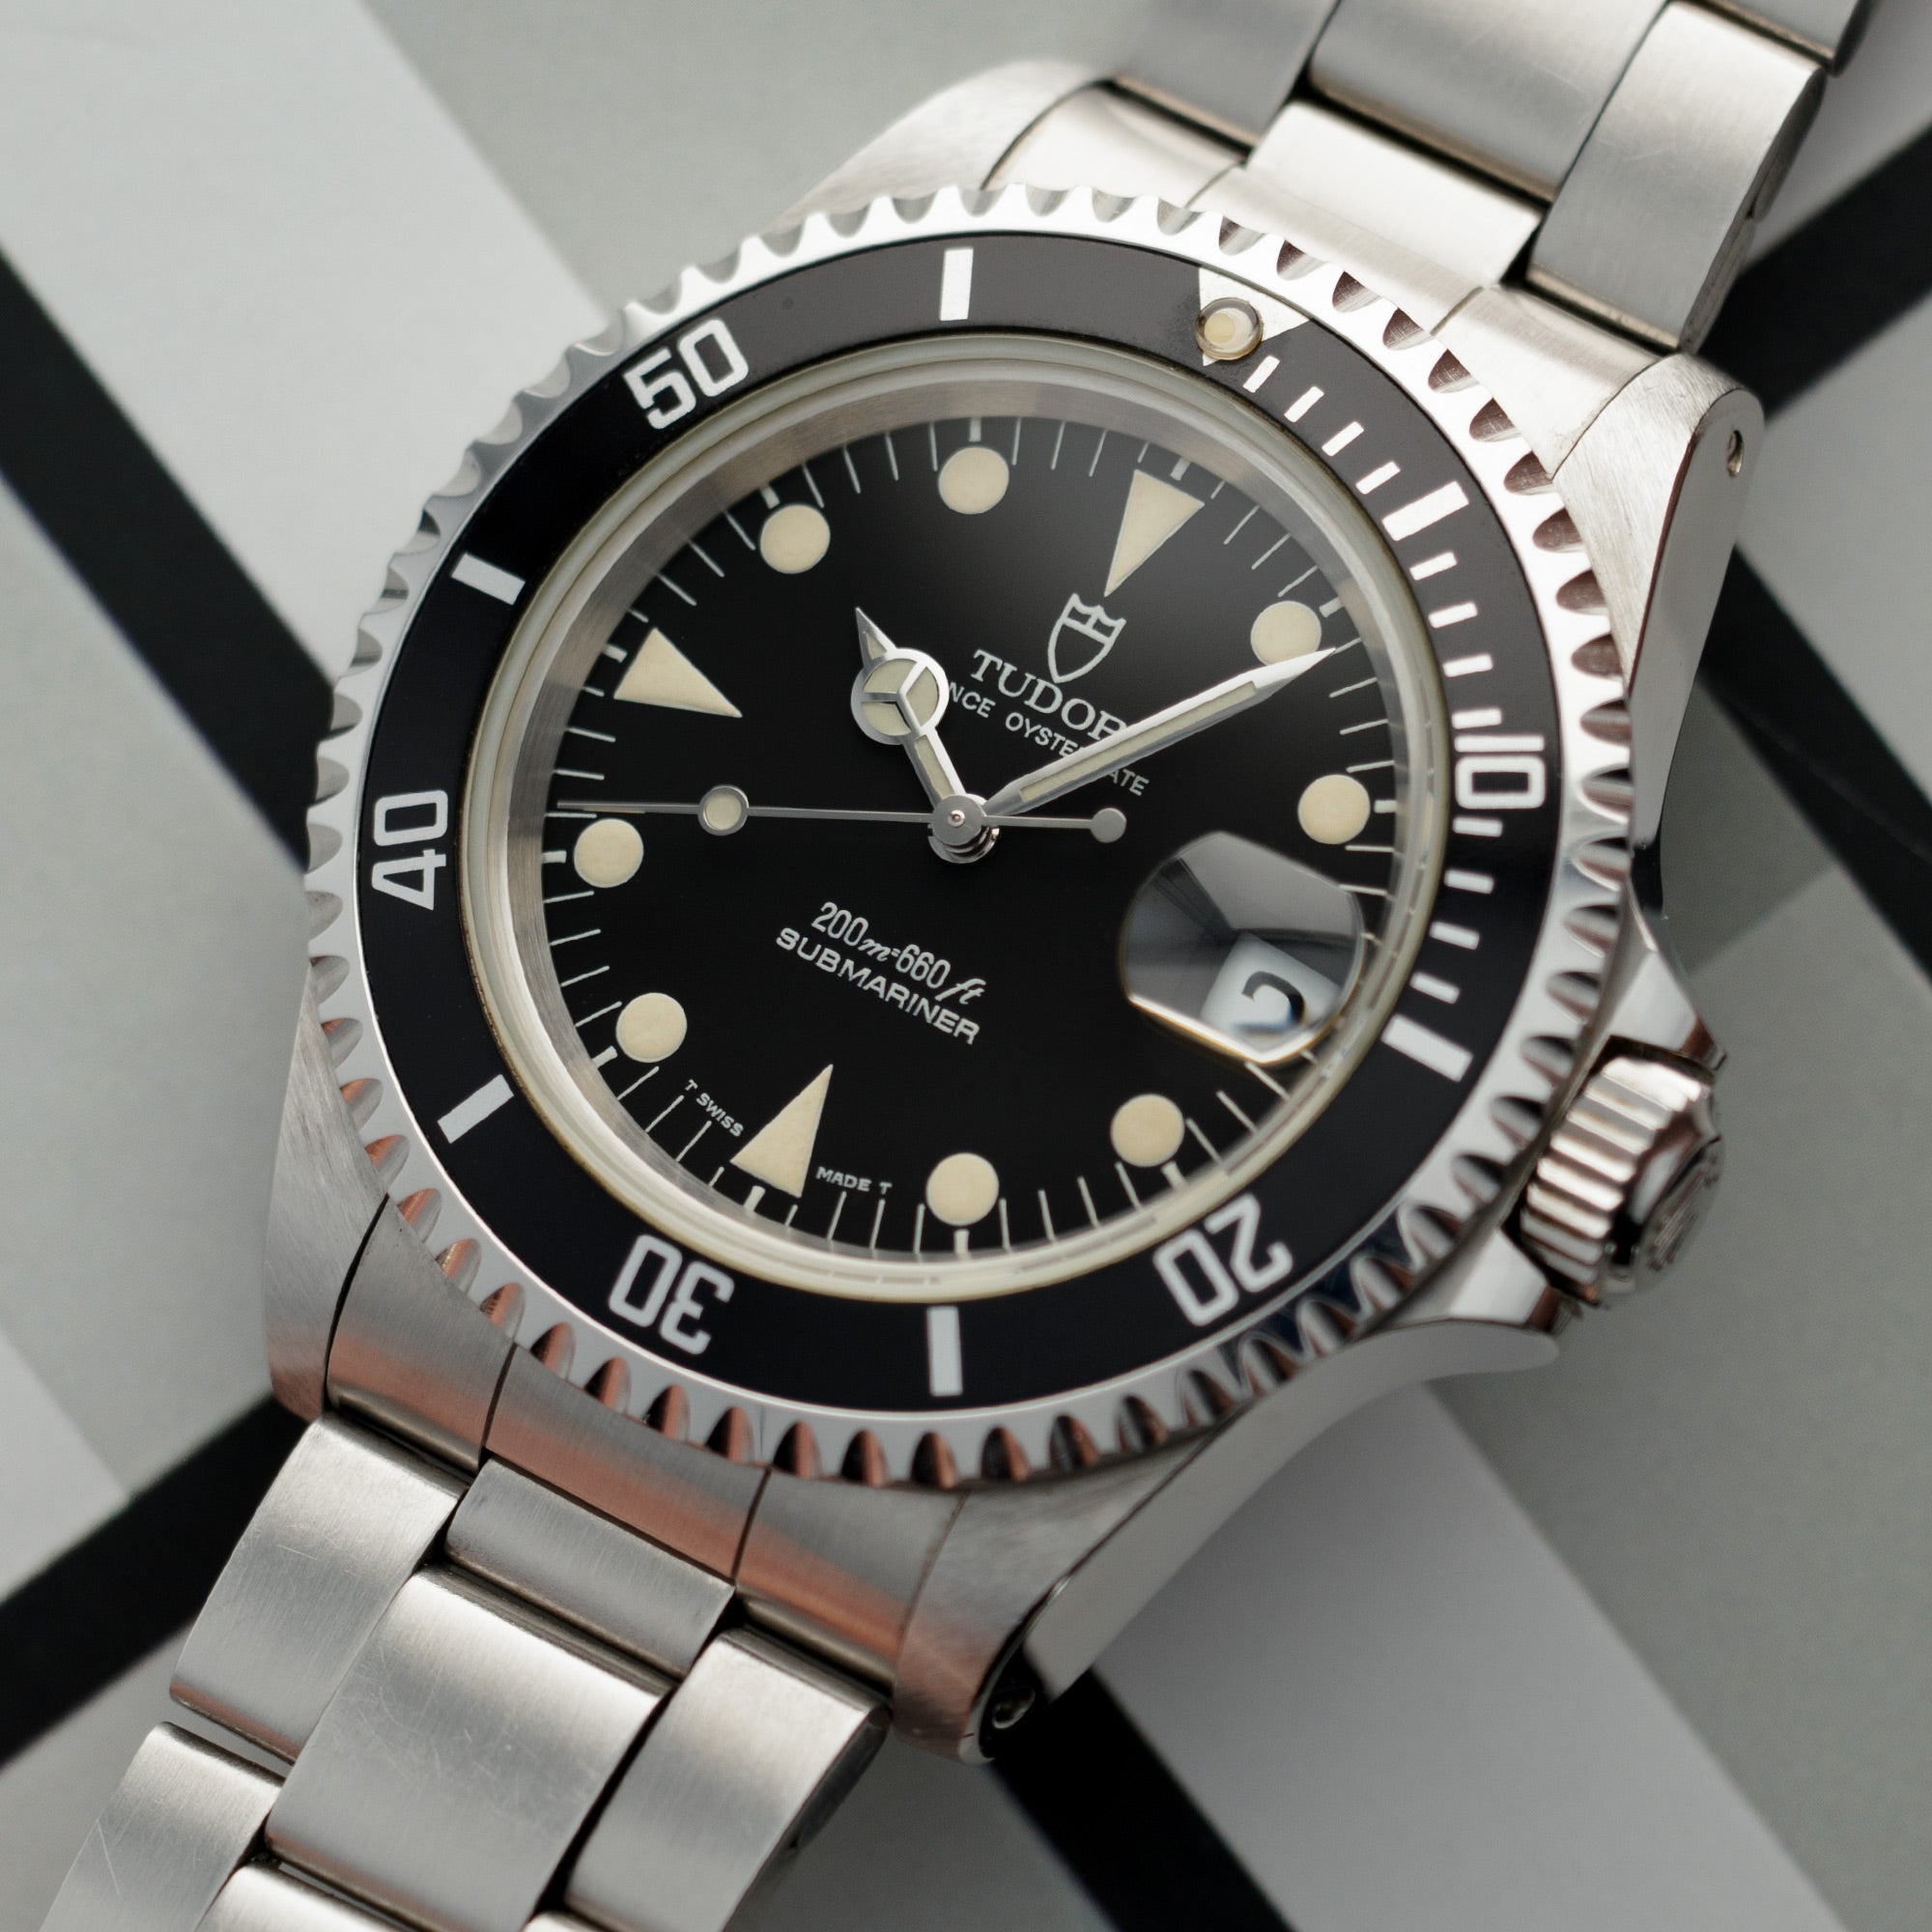 Tudor - Tudor Steel Submariner Ref. 79190 - The Keystone Watches